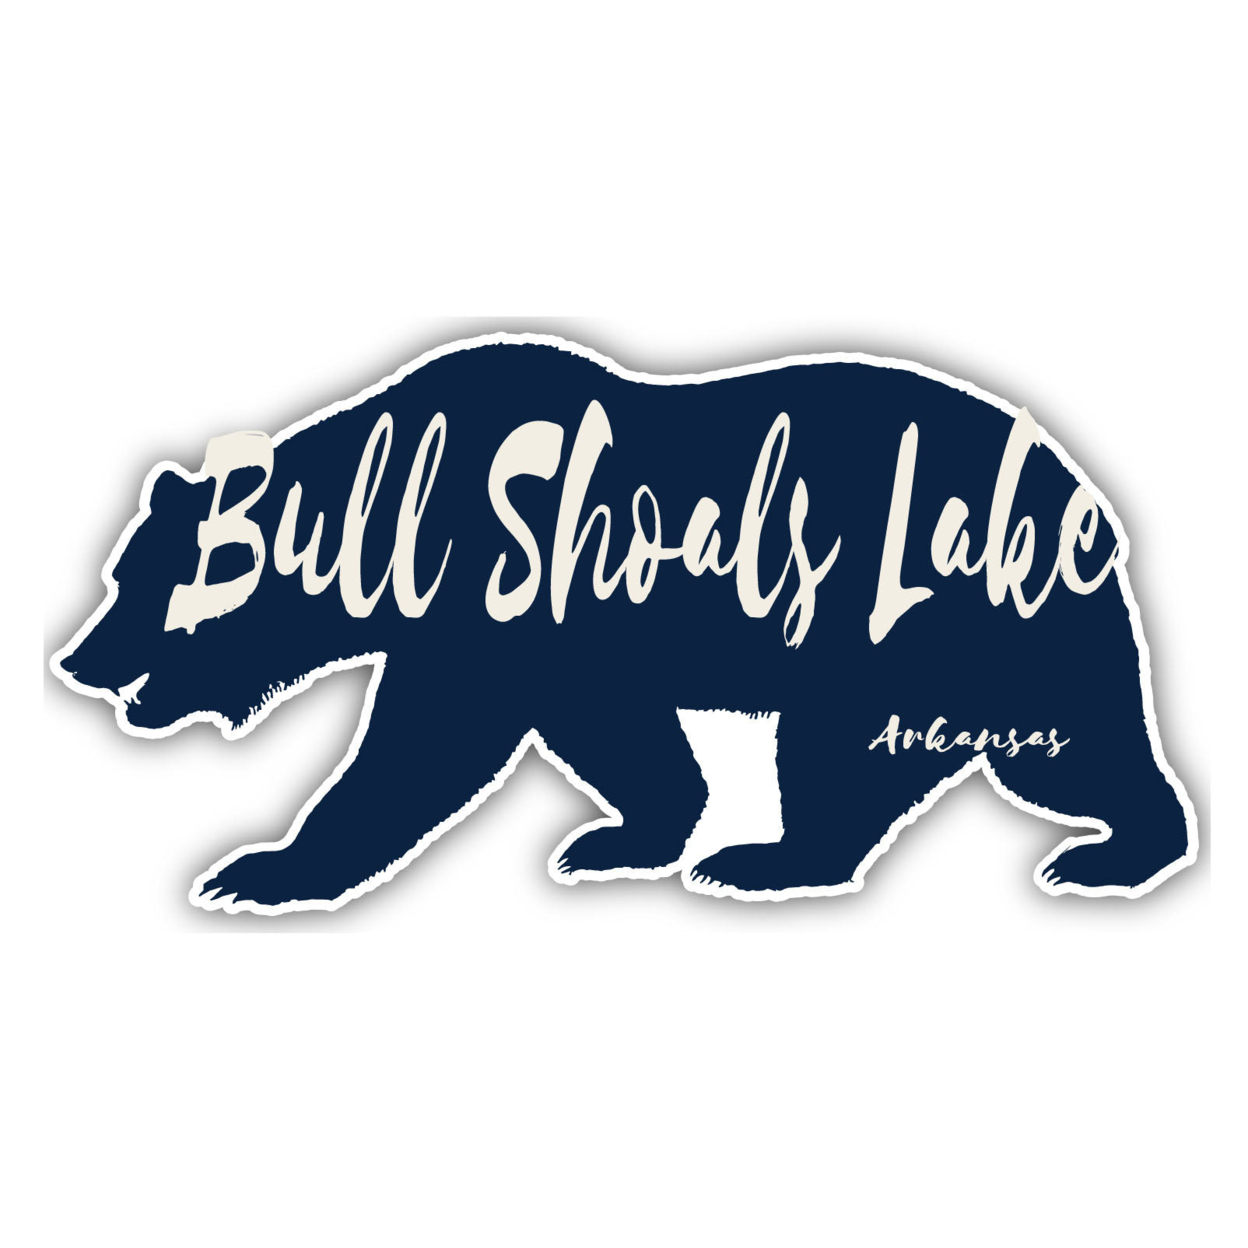 Bull Shoals Lake Arkansas Souvenir Decorative Stickers (Choose Theme And Size) - 4-Pack, 10-Inch, Tent